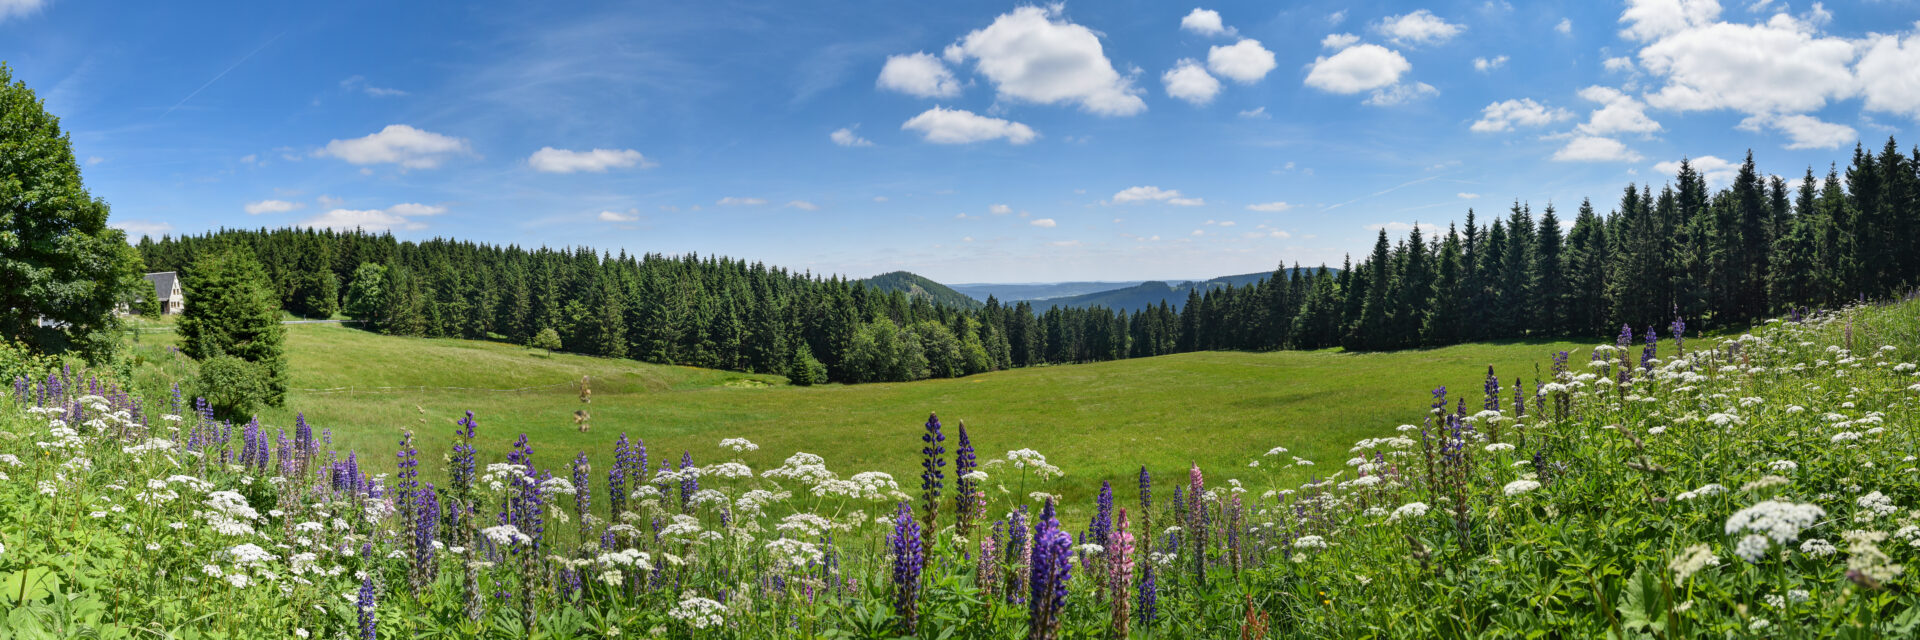 Thüringer Wald im Sommer mit Bergwiese